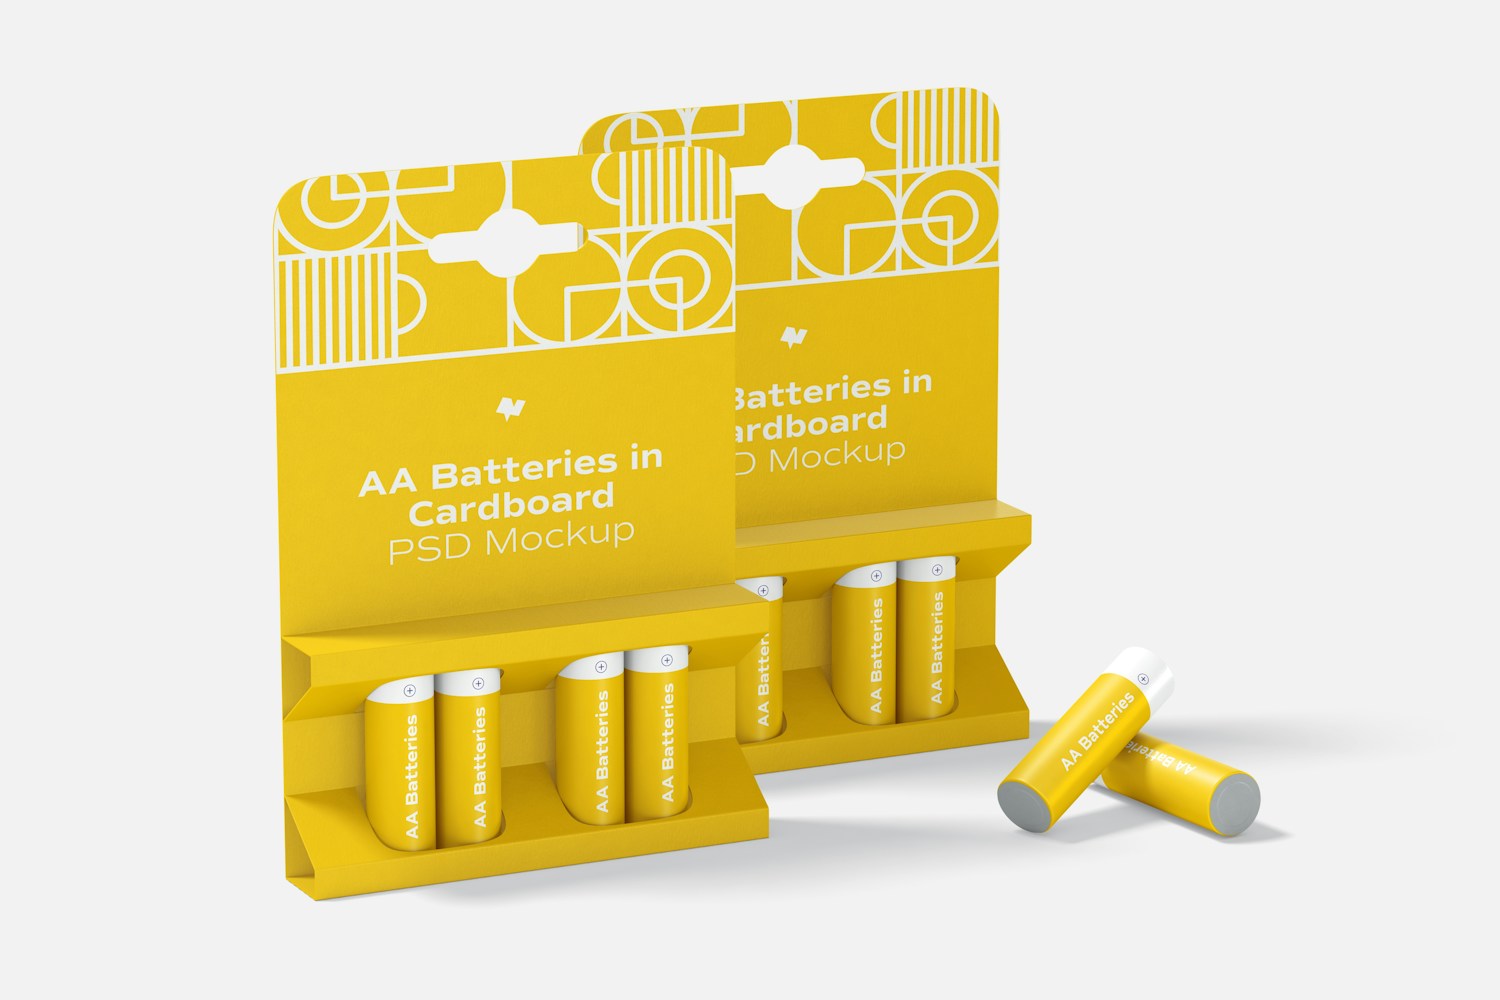 AA Batteries in Cardboard Mockup, Perspective